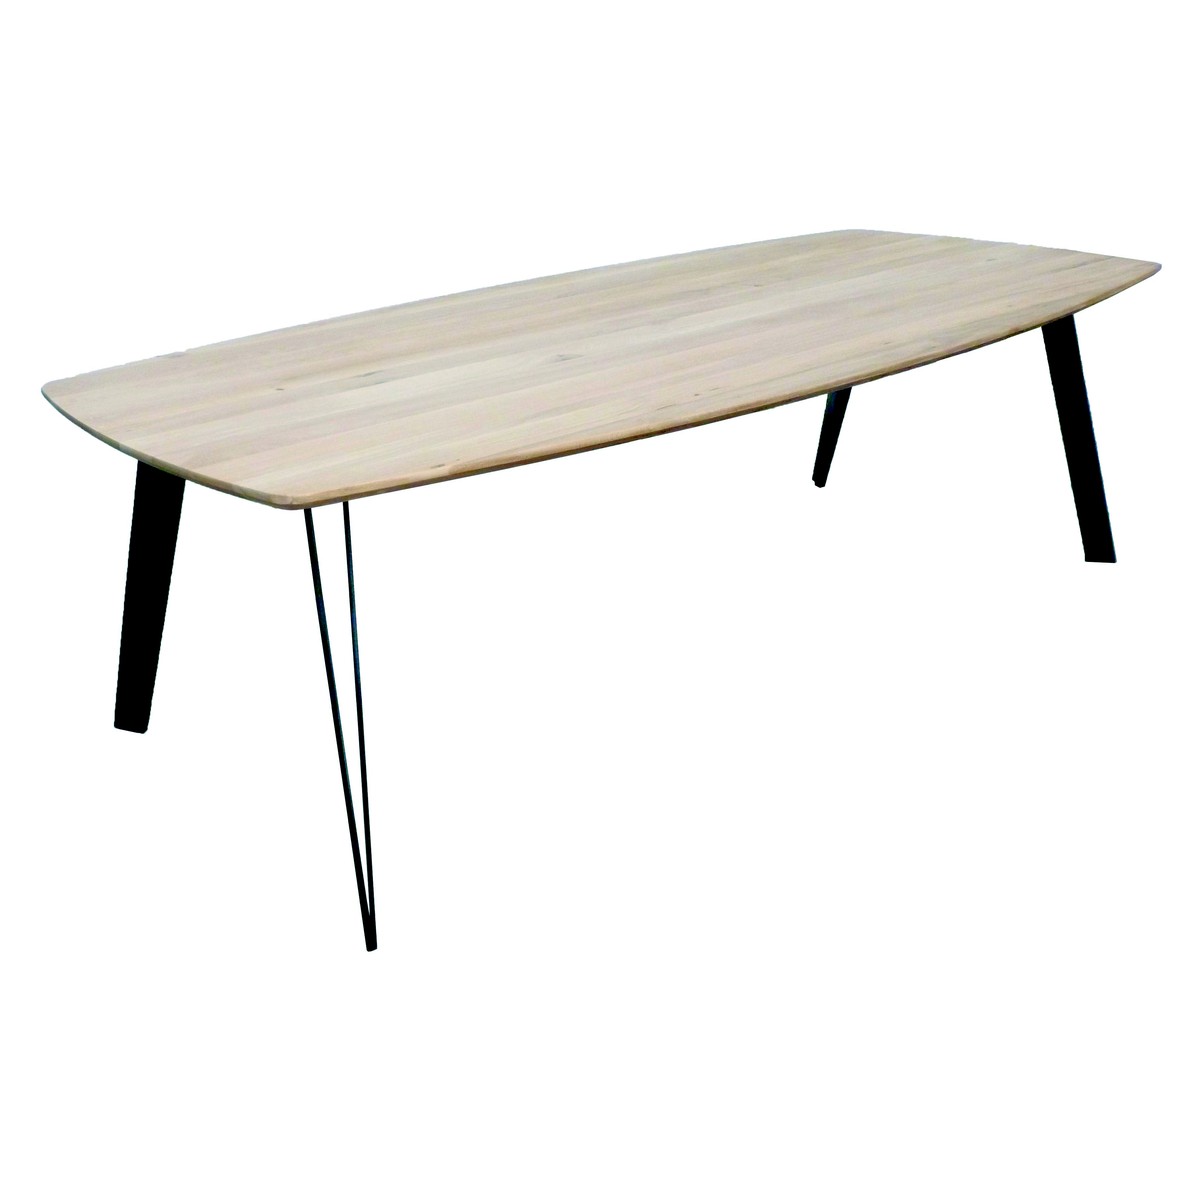   Table Aran Droit ovale  200x110x77cm